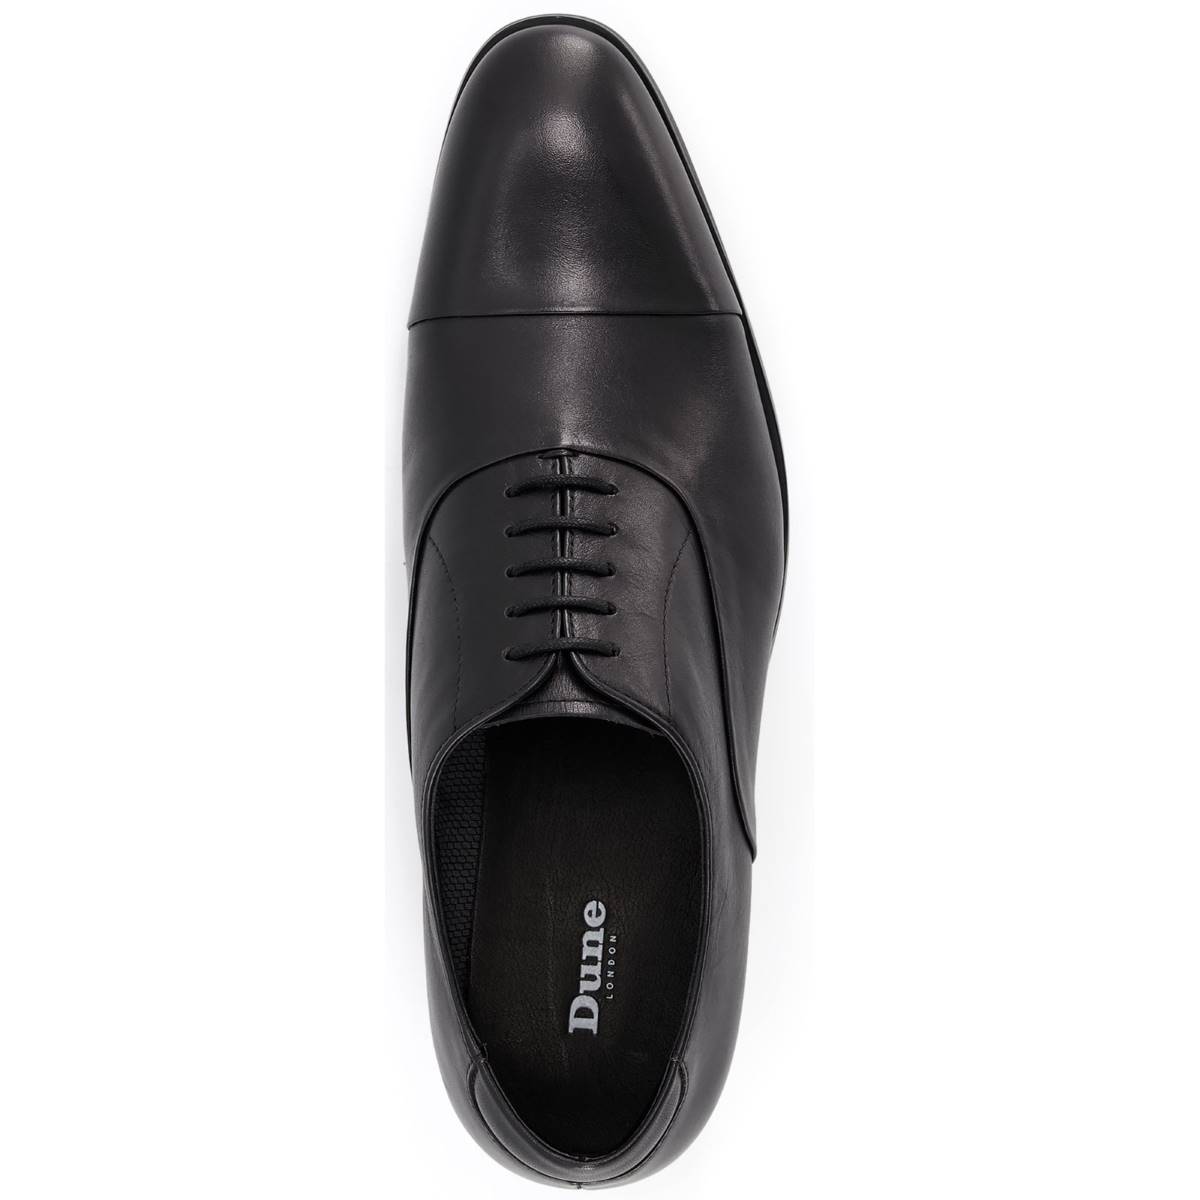 Dune London Secrecy Black Mens formal shoes 629509520019484